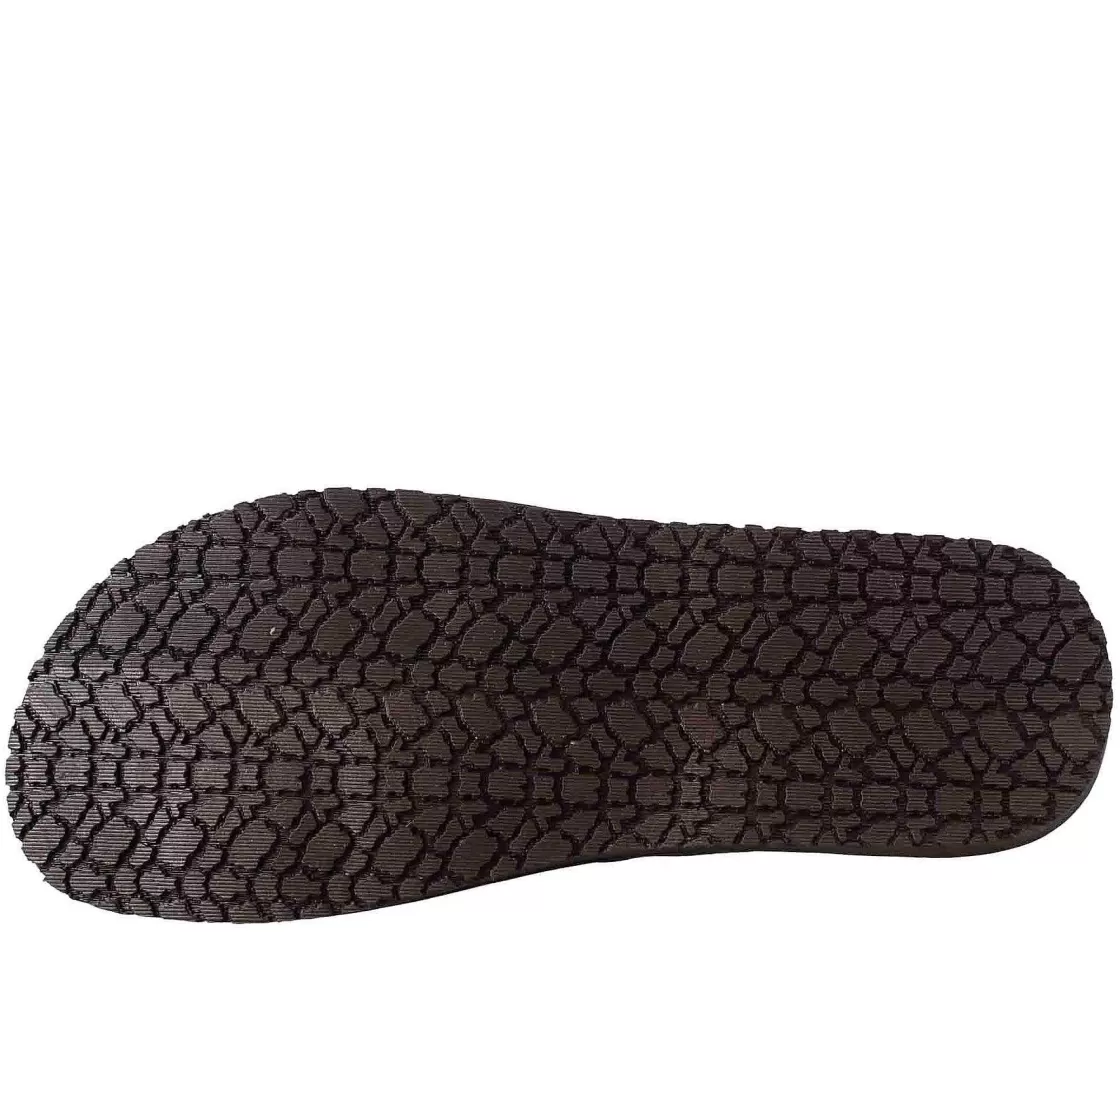 Leonardo Handmade Men'S Sandals In Black Leather With Velcro Closure Best Sale